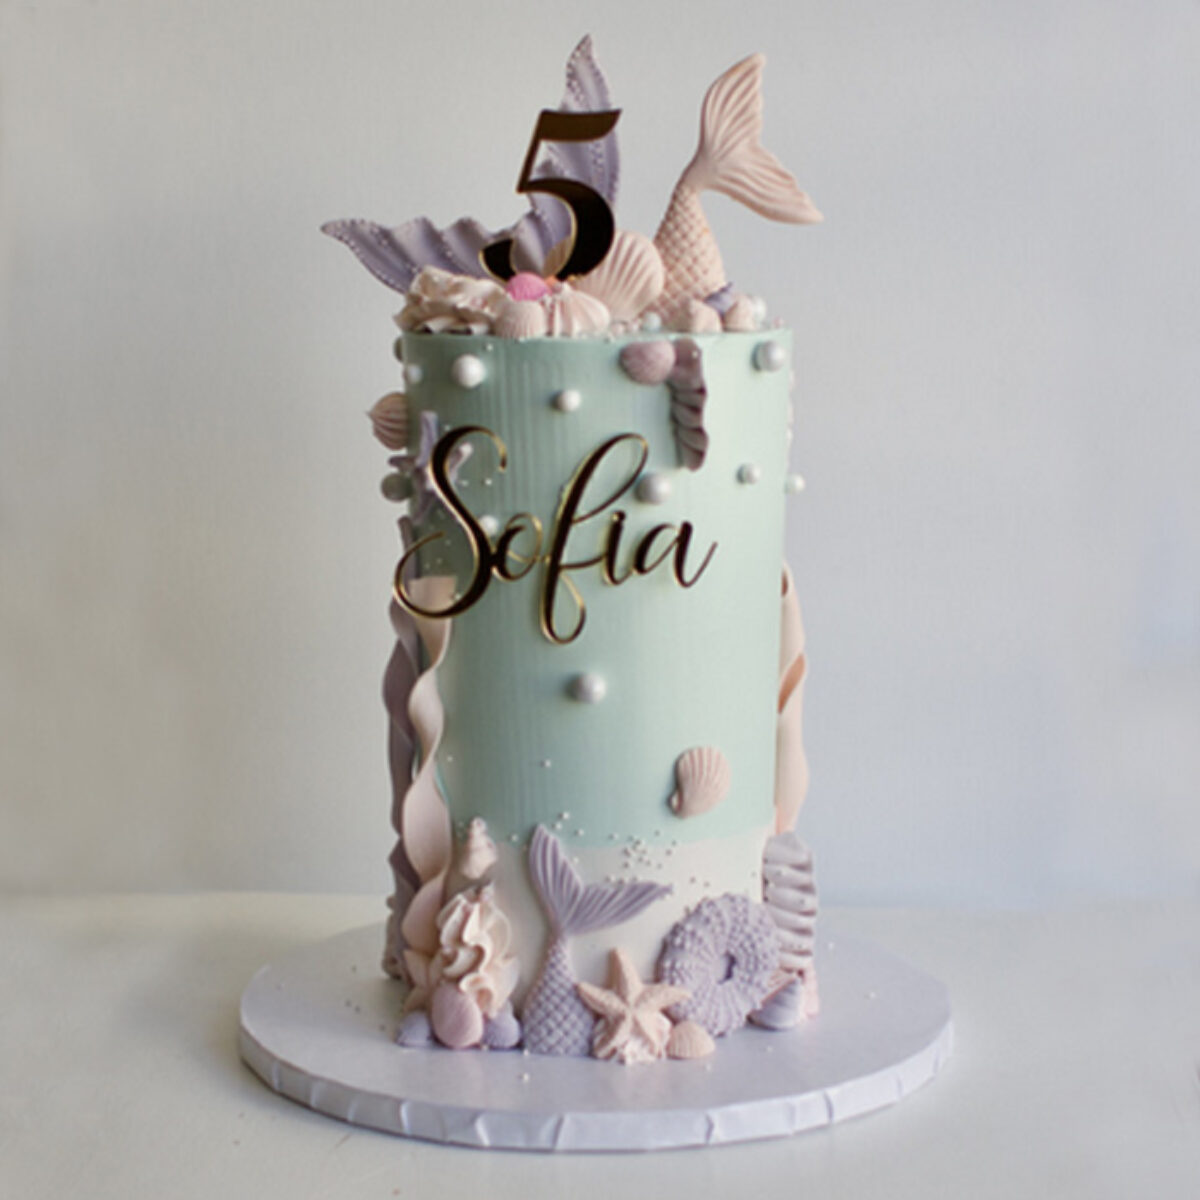 Mermaid cake – Bake me one